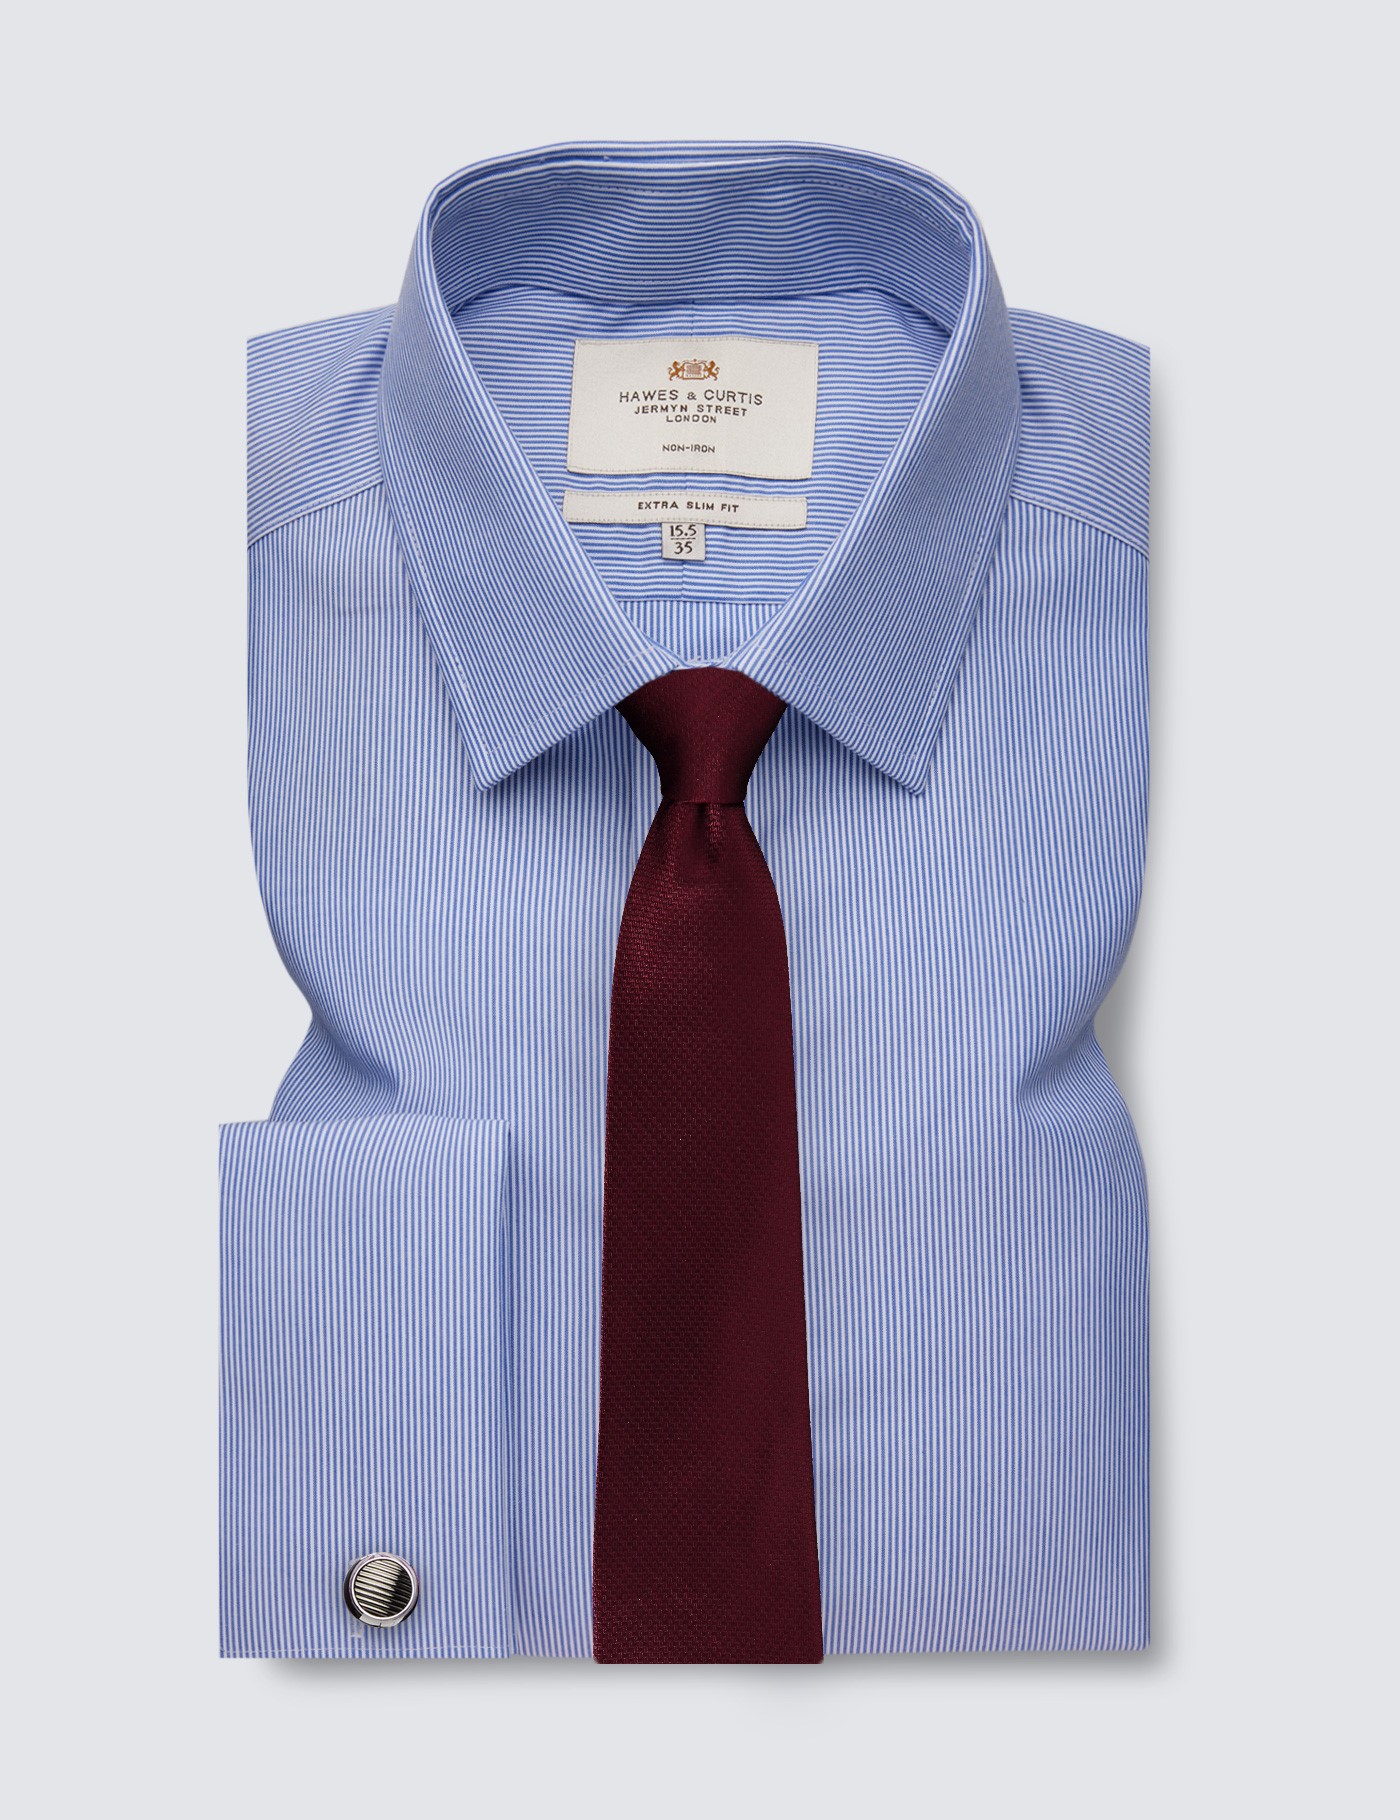 Hawes & Curtis Non-Iron Blue & White Stripe Extra Slim Shirt - Double Cuff